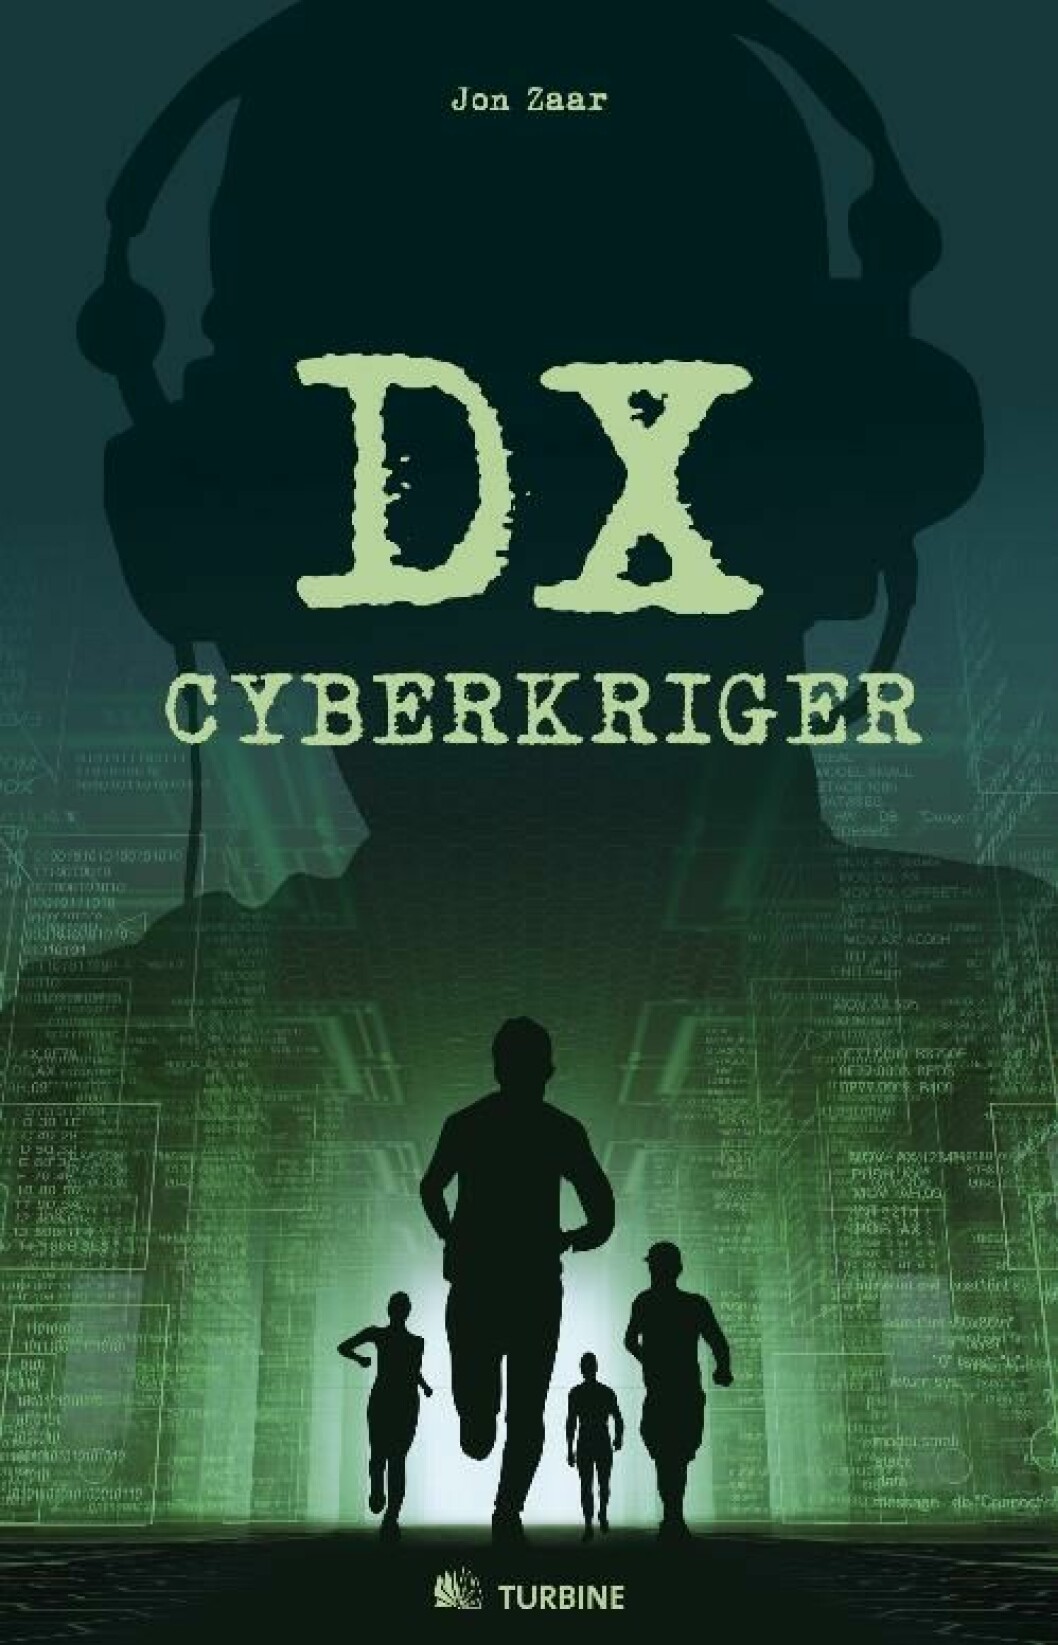 DX Cyberkriger